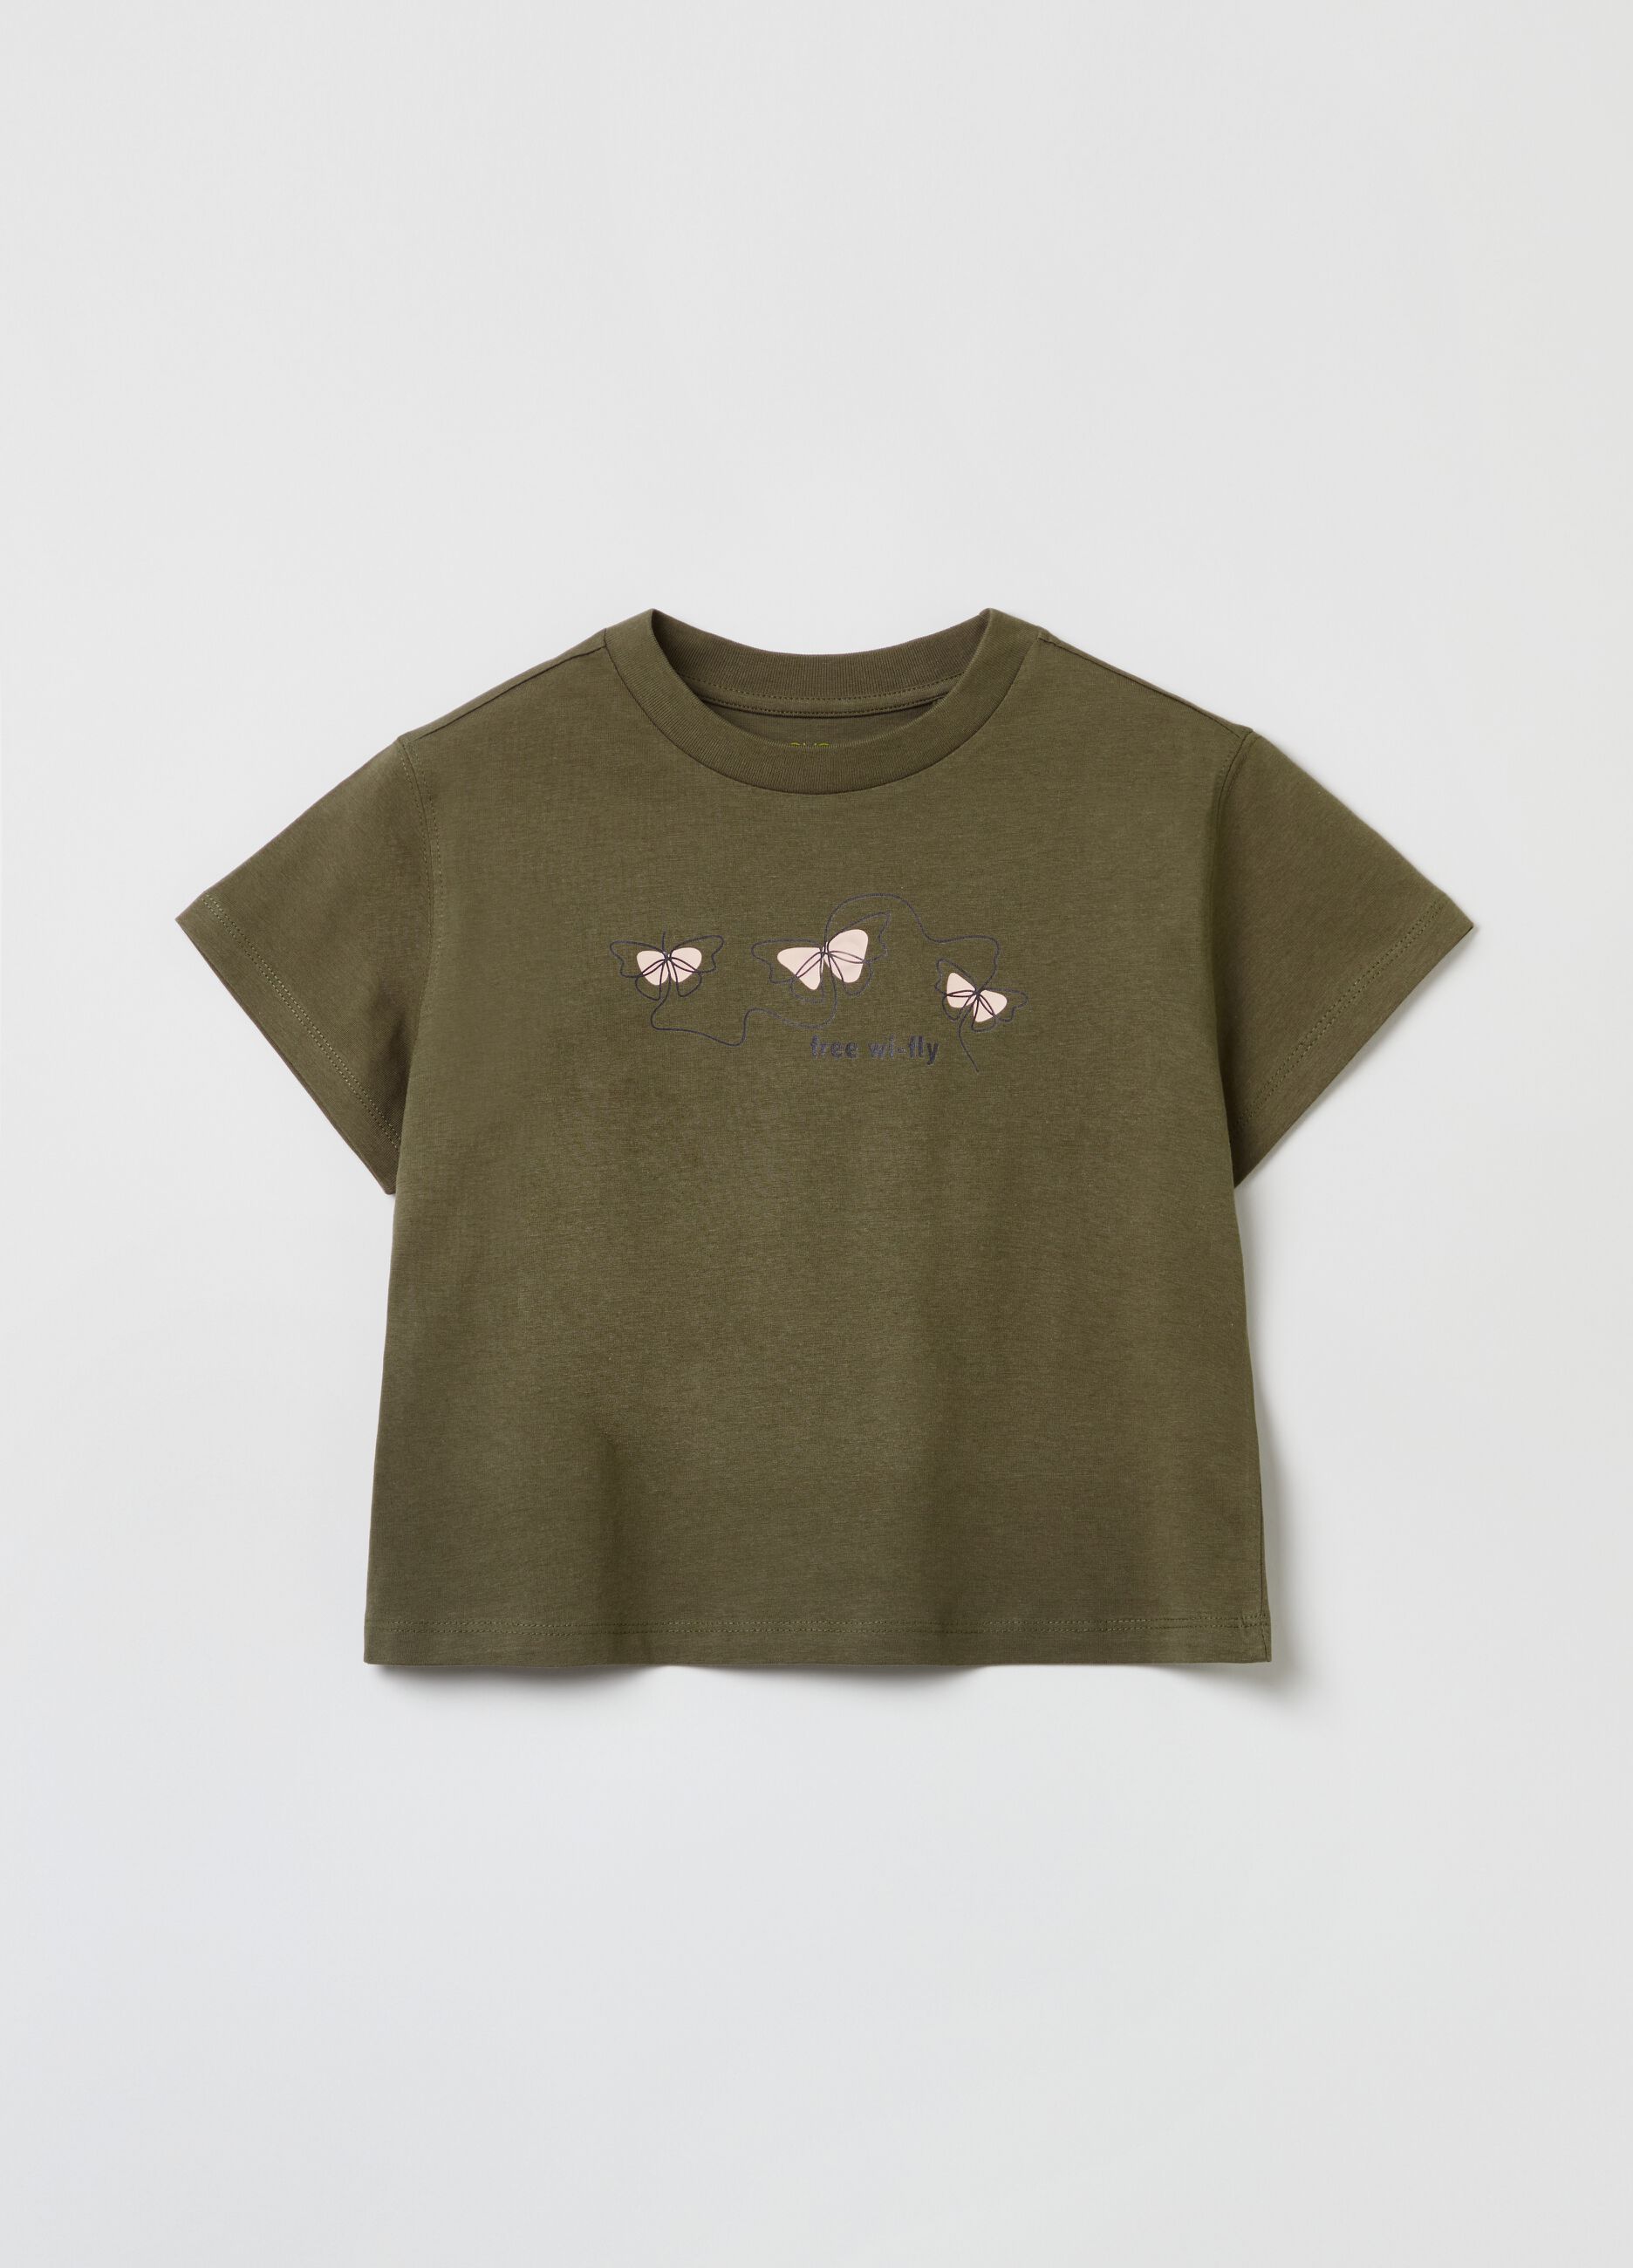 T-shirt in cotone con stampa farfalle